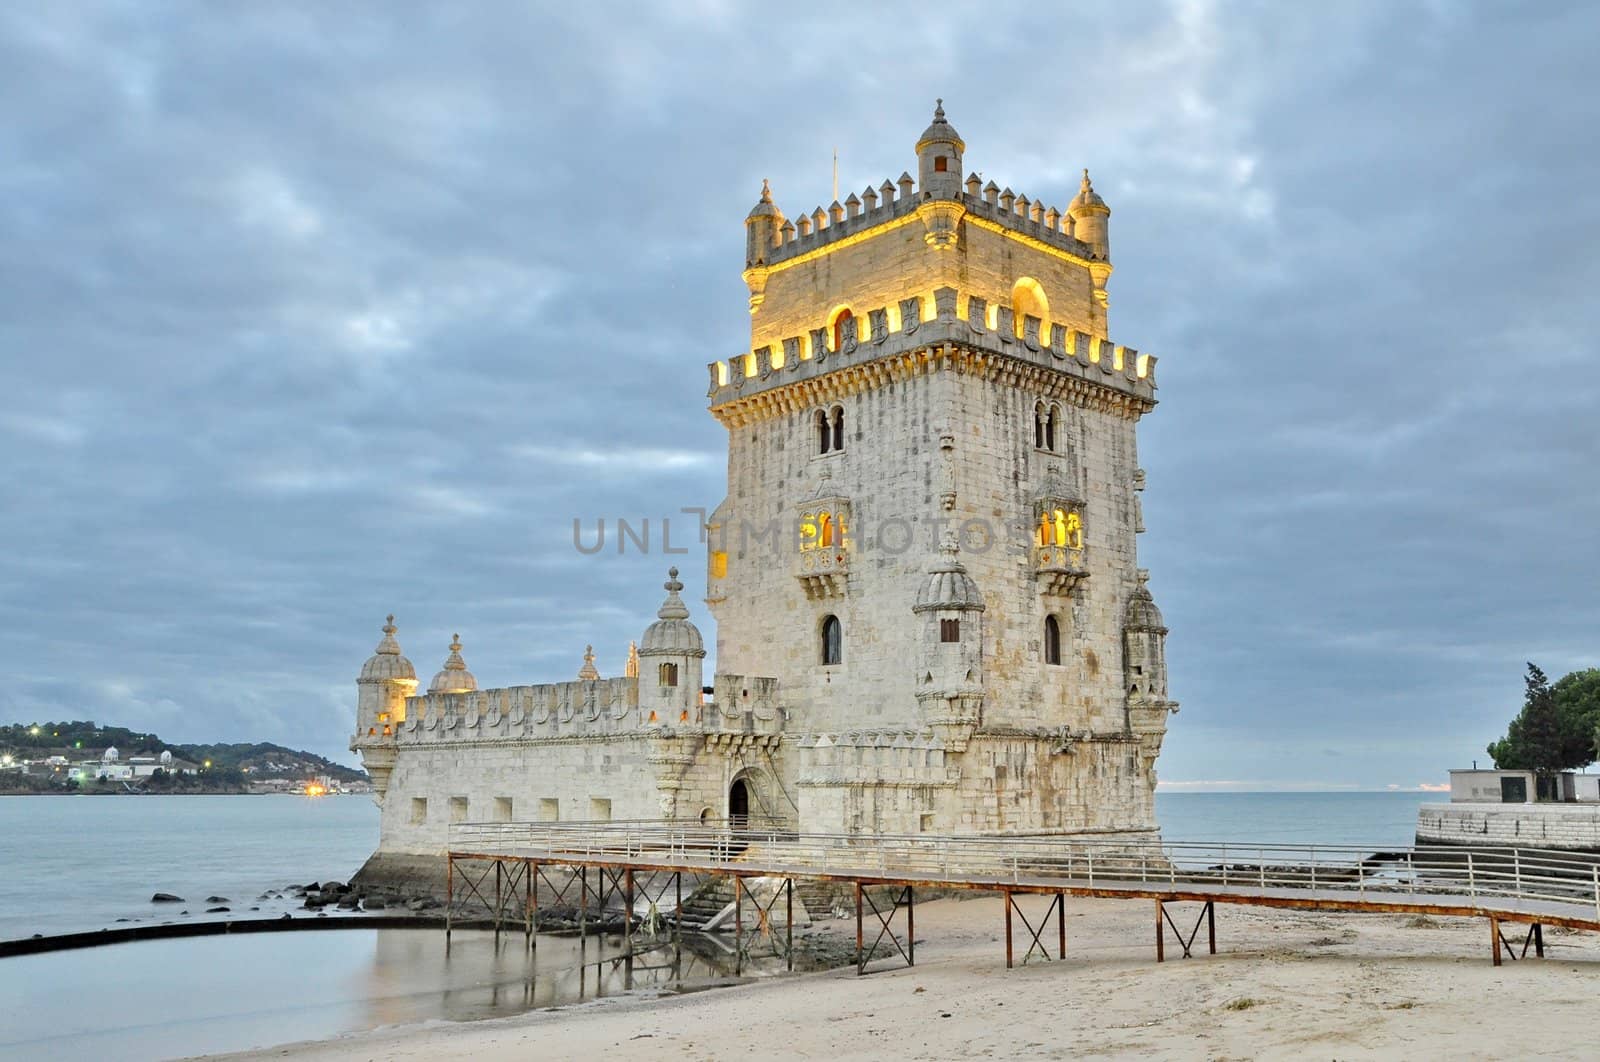 Torre de Belém (Belém tower) of Lisbon, Portugal by anderm